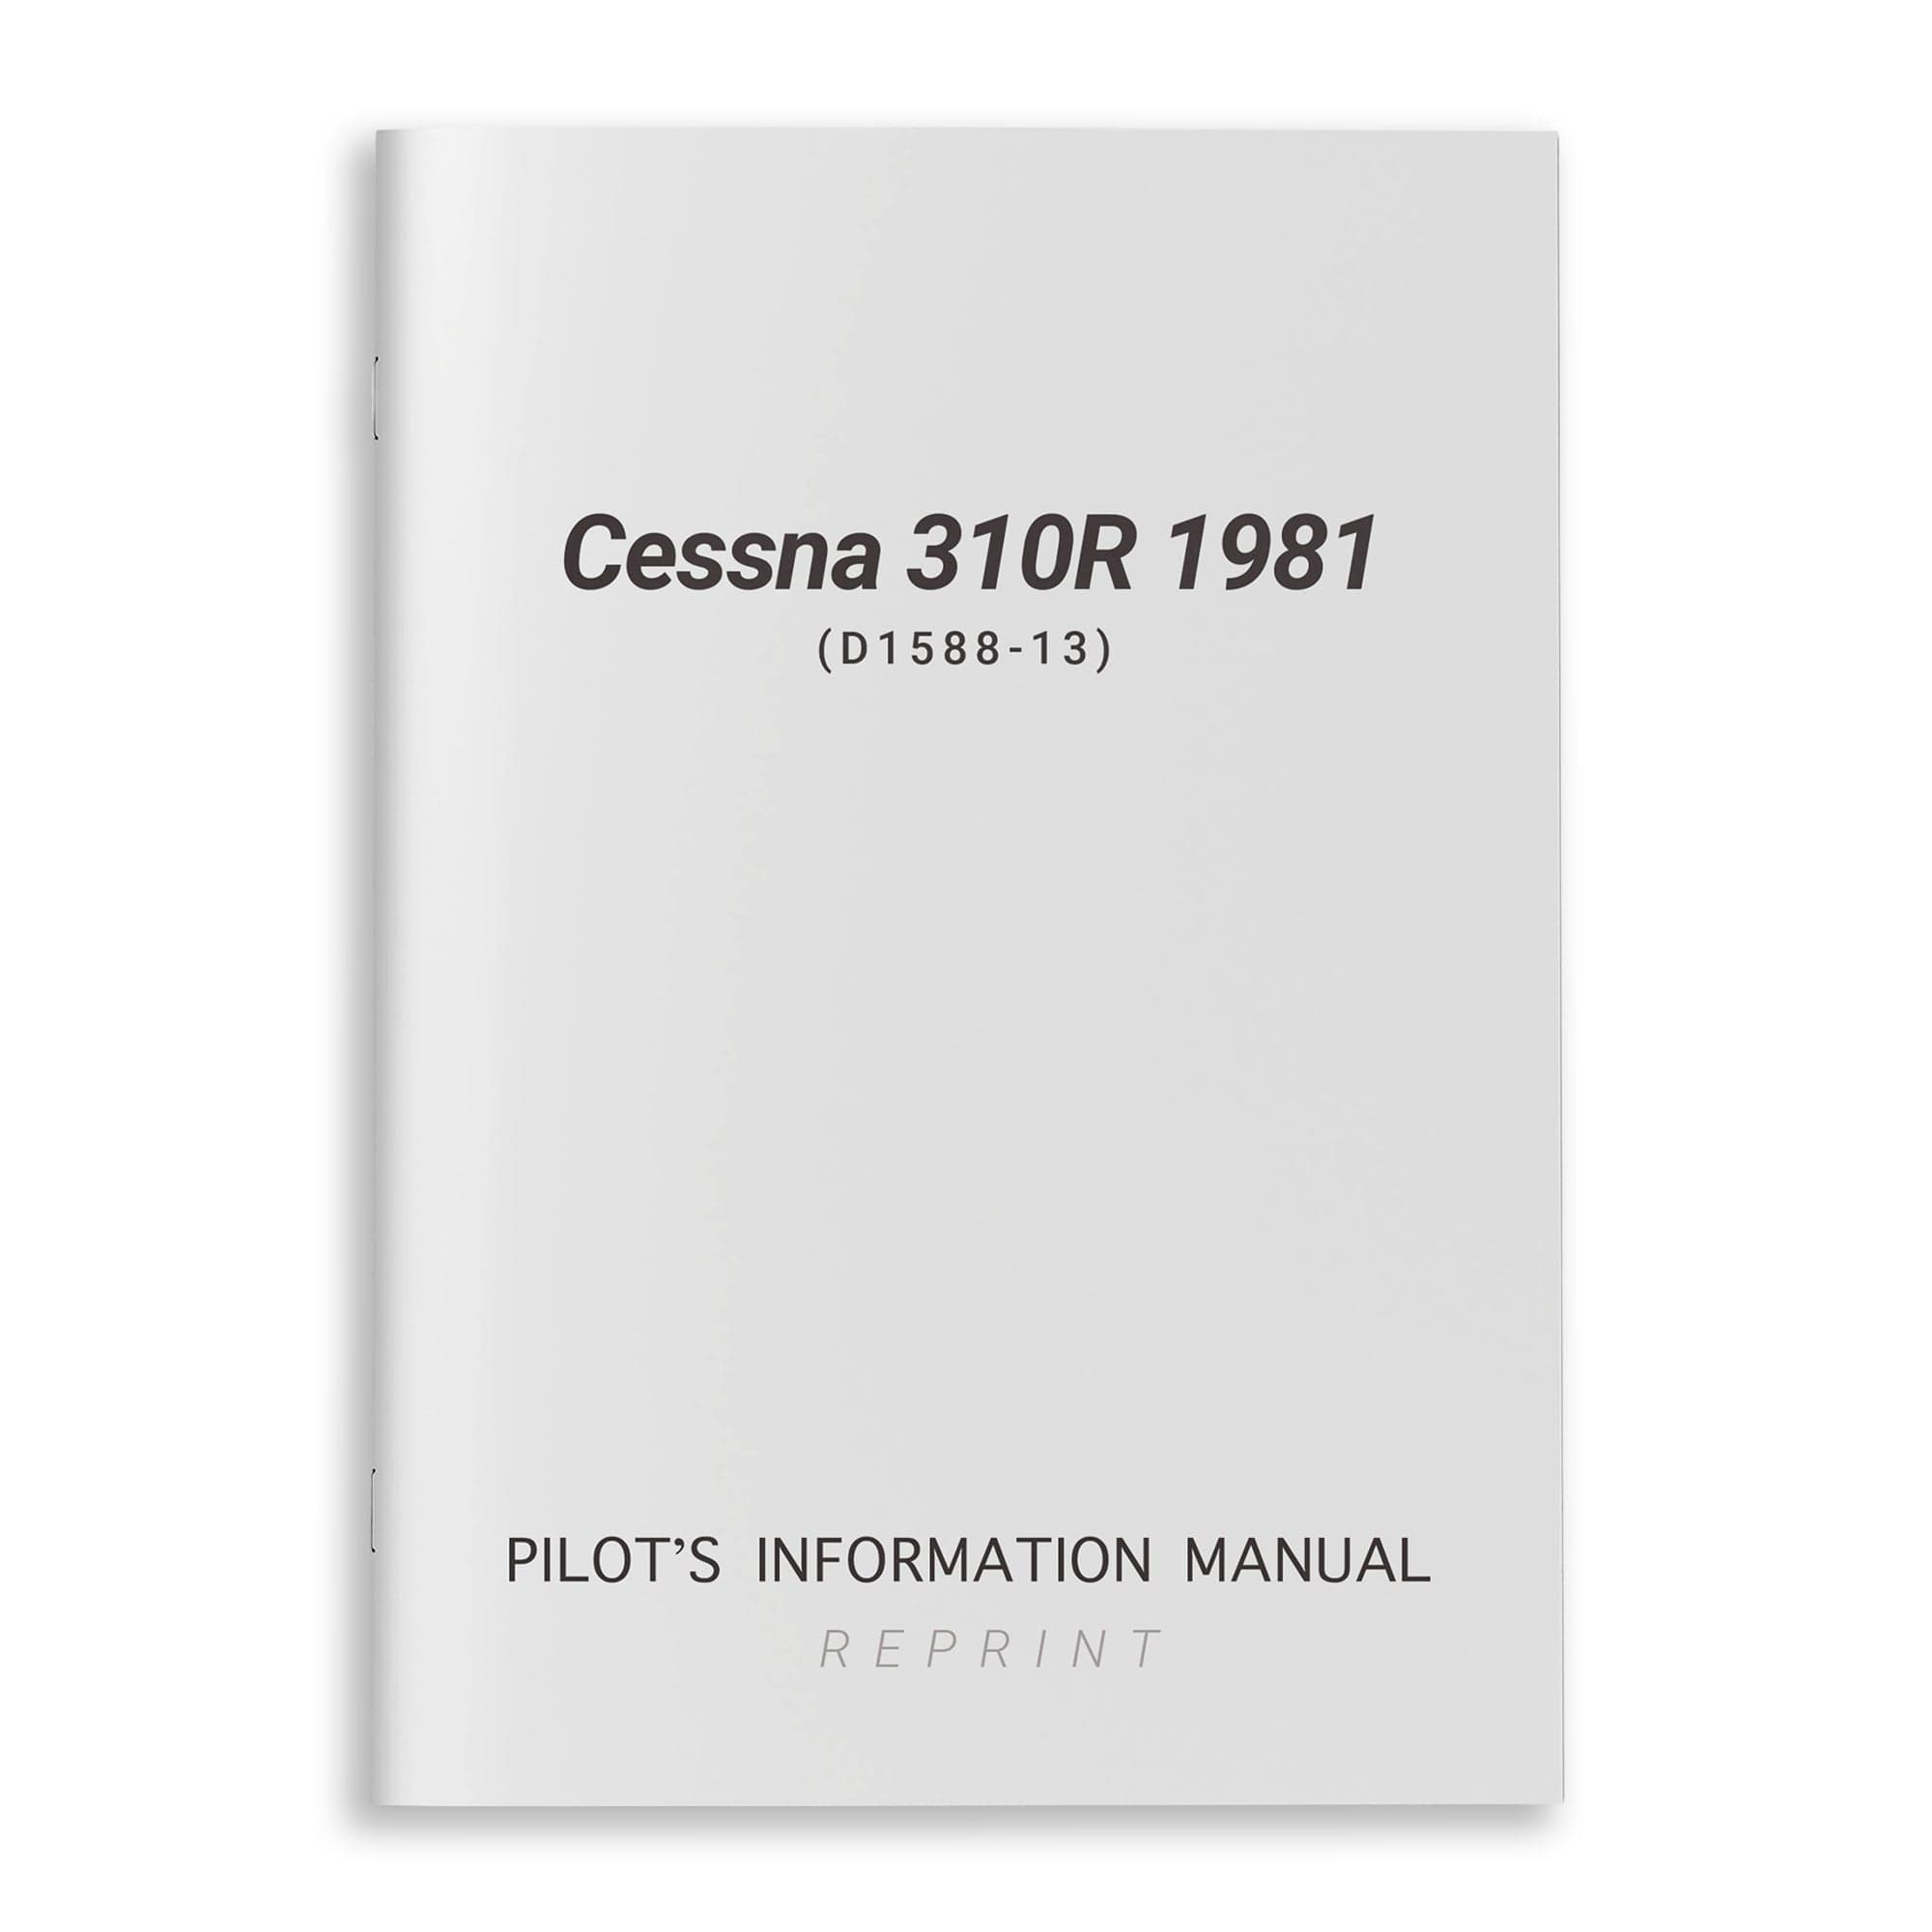 Cessna 310R 1981 Pilot's Information Manual (D1588-13)